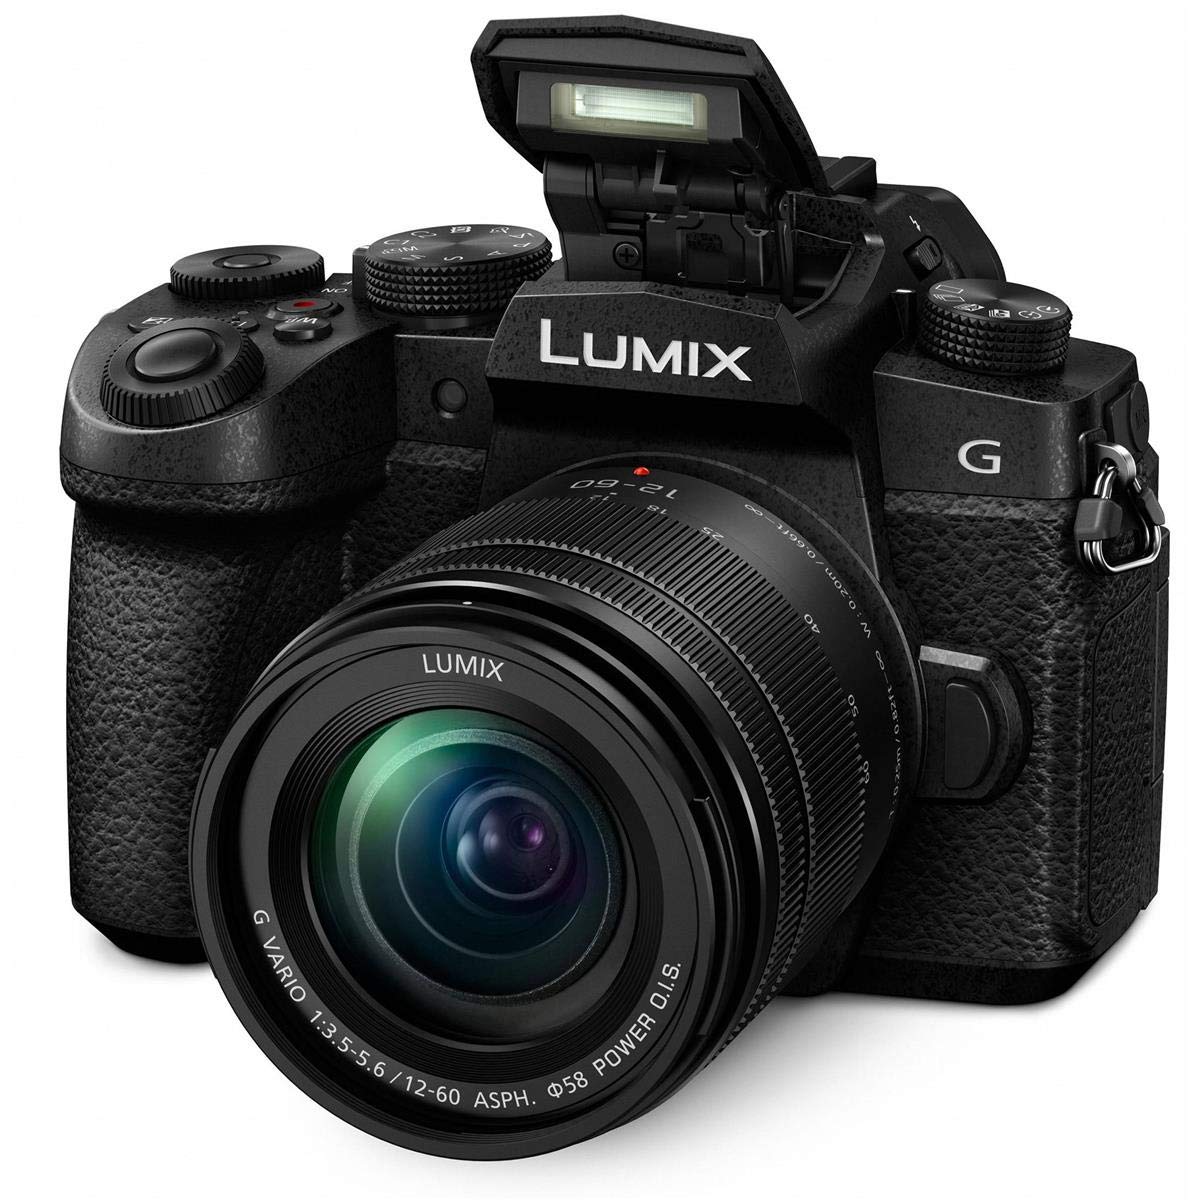 Panasonic LUMIX G95 20.3 Megapixel Mirrorless Digital Camera, 12-60mm F3.5-5.6 Lens, Pre-Installed V-Log L, Bundle with Bag, CLAR LED Light, Marantz Mic, 64GB SD Card, Cleaning Kit, Card Reader